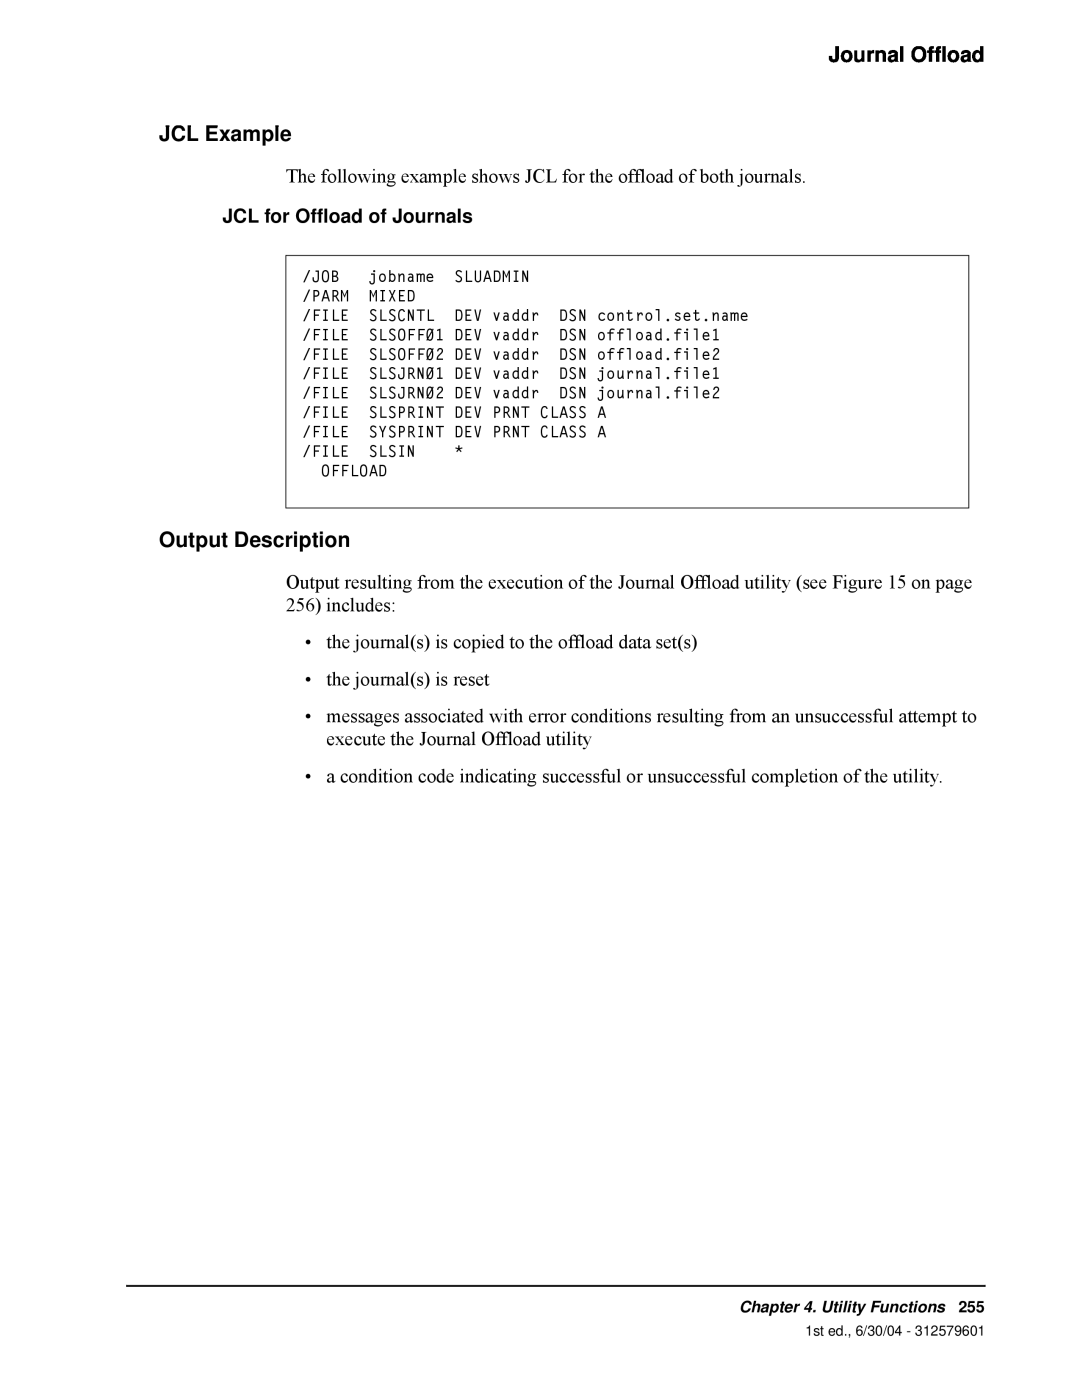 StorageTek 6 manual Journal Offload JCL Example, JCL for Offload of Journals, Output Description 